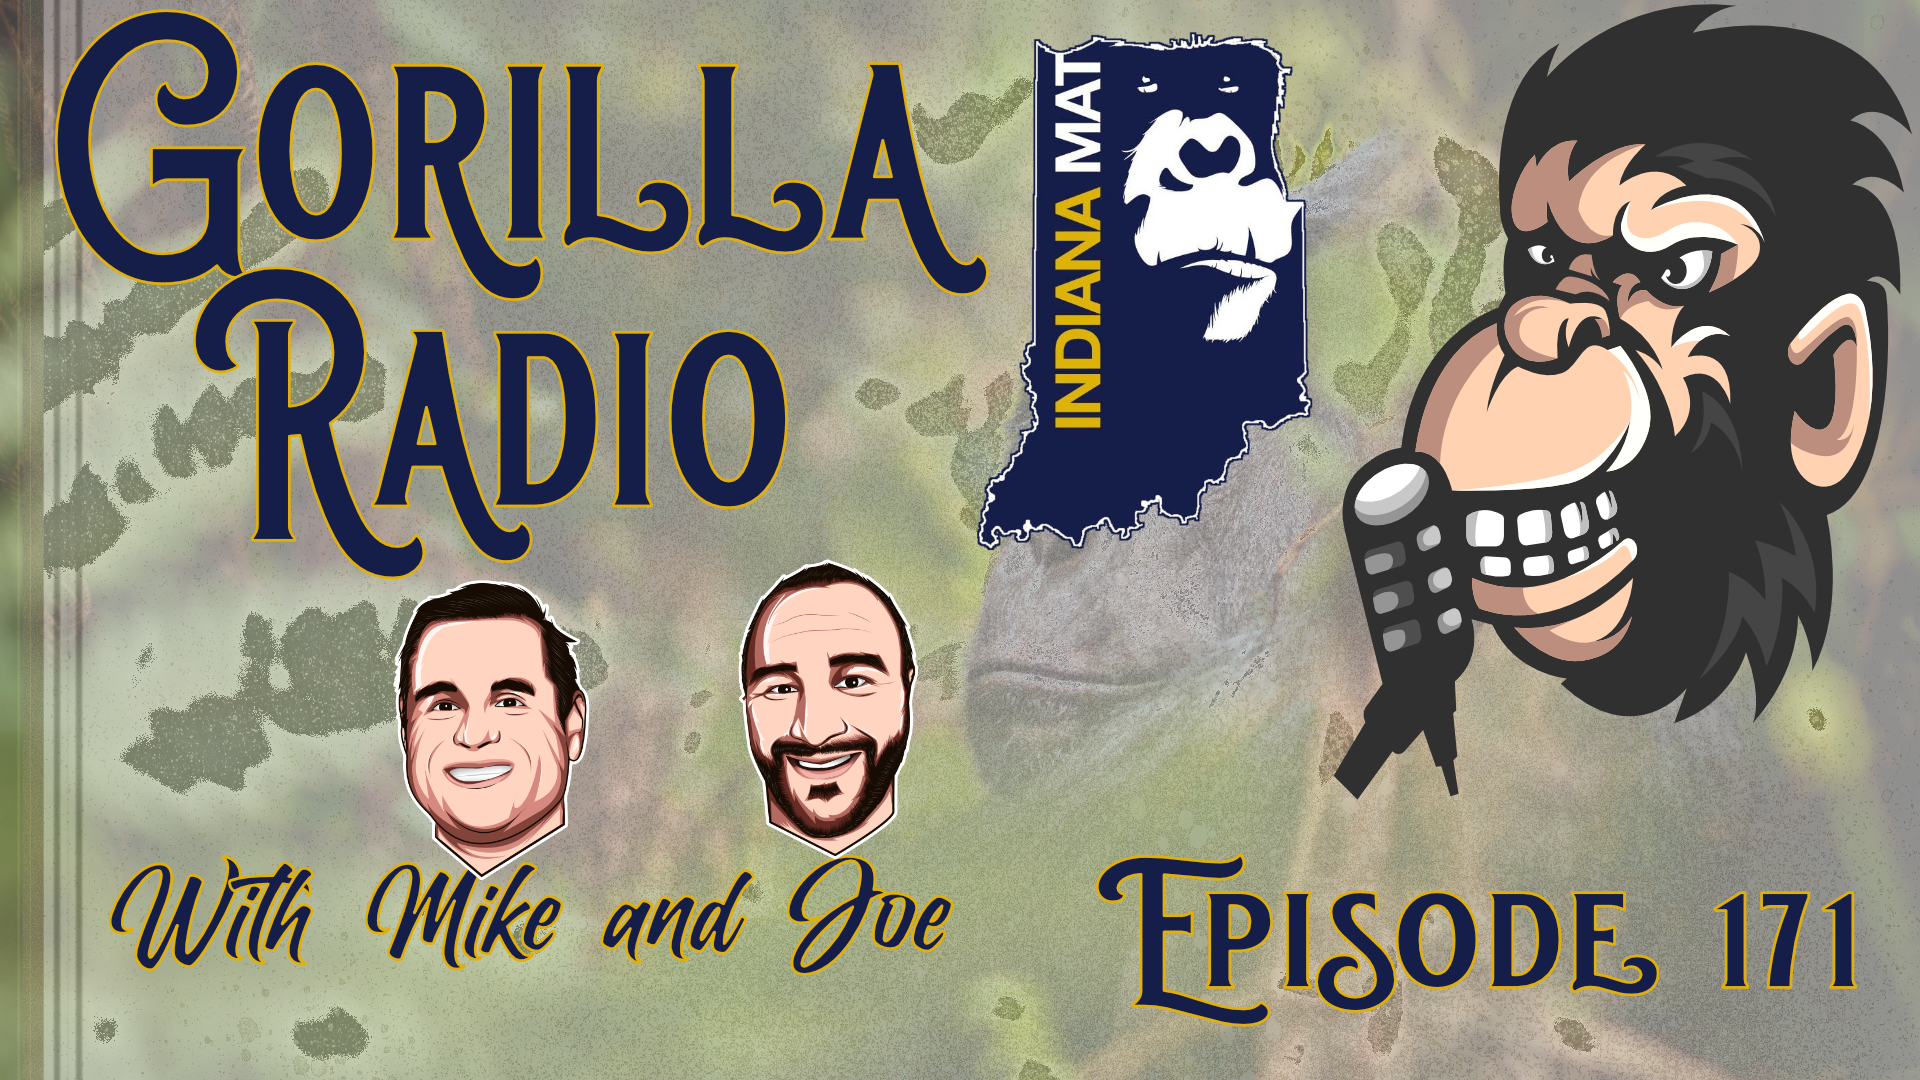 More information about "IndianaMat Gorilla Radio Episode 171"